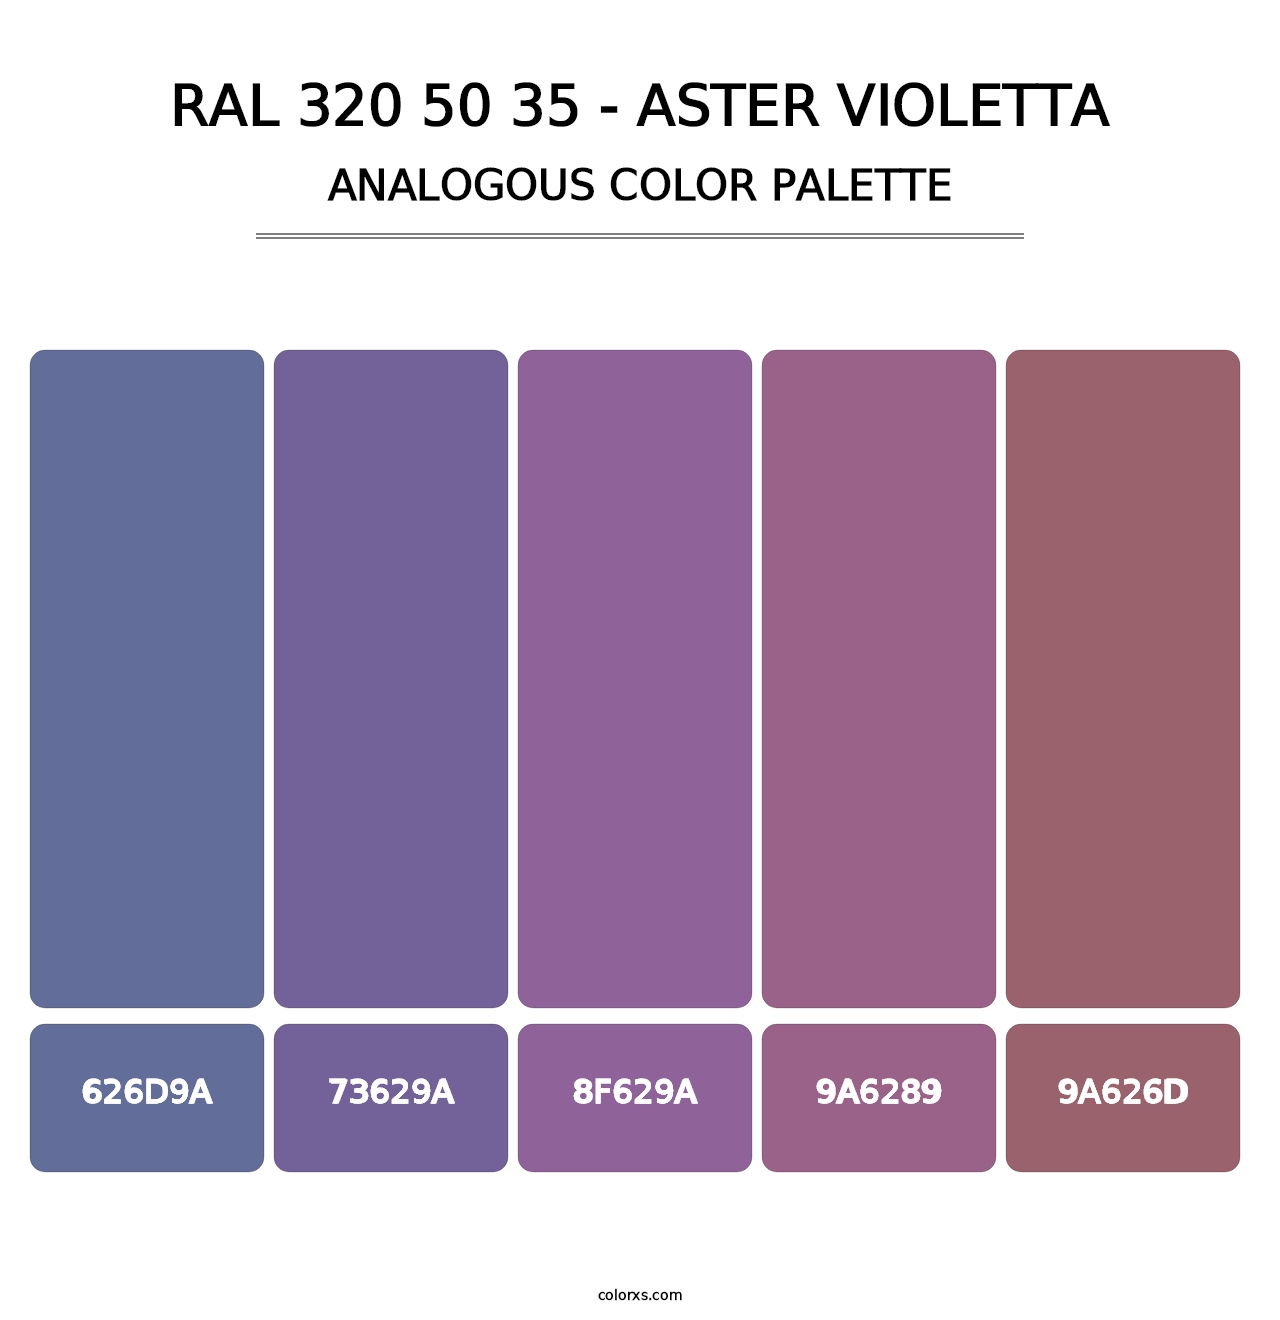 RAL 320 50 35 - Aster Violetta - Analogous Color Palette